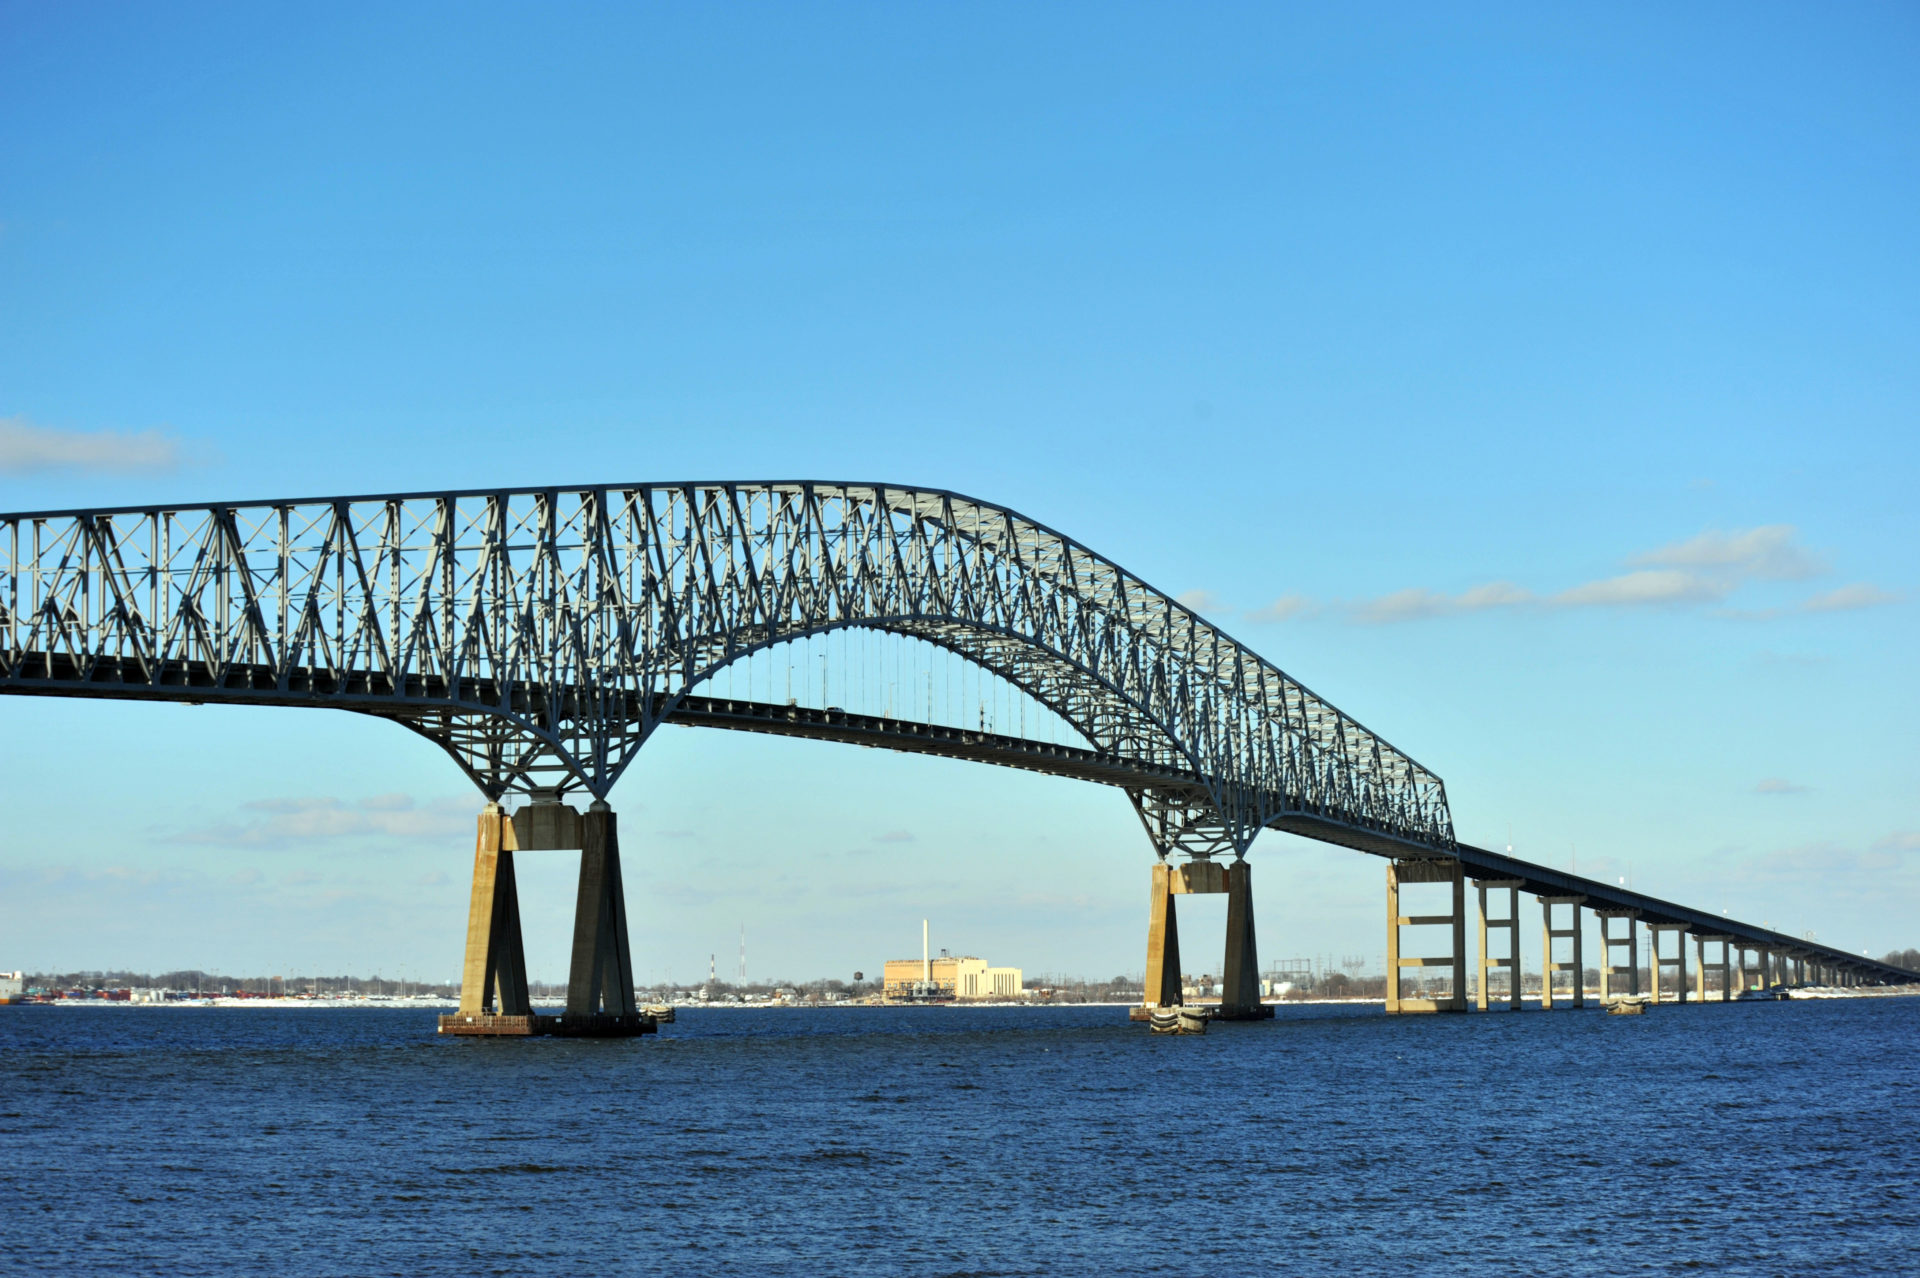 The Francis Scott Key bridge over the Chesapeake Bay in Maryland, 14-2-10. 